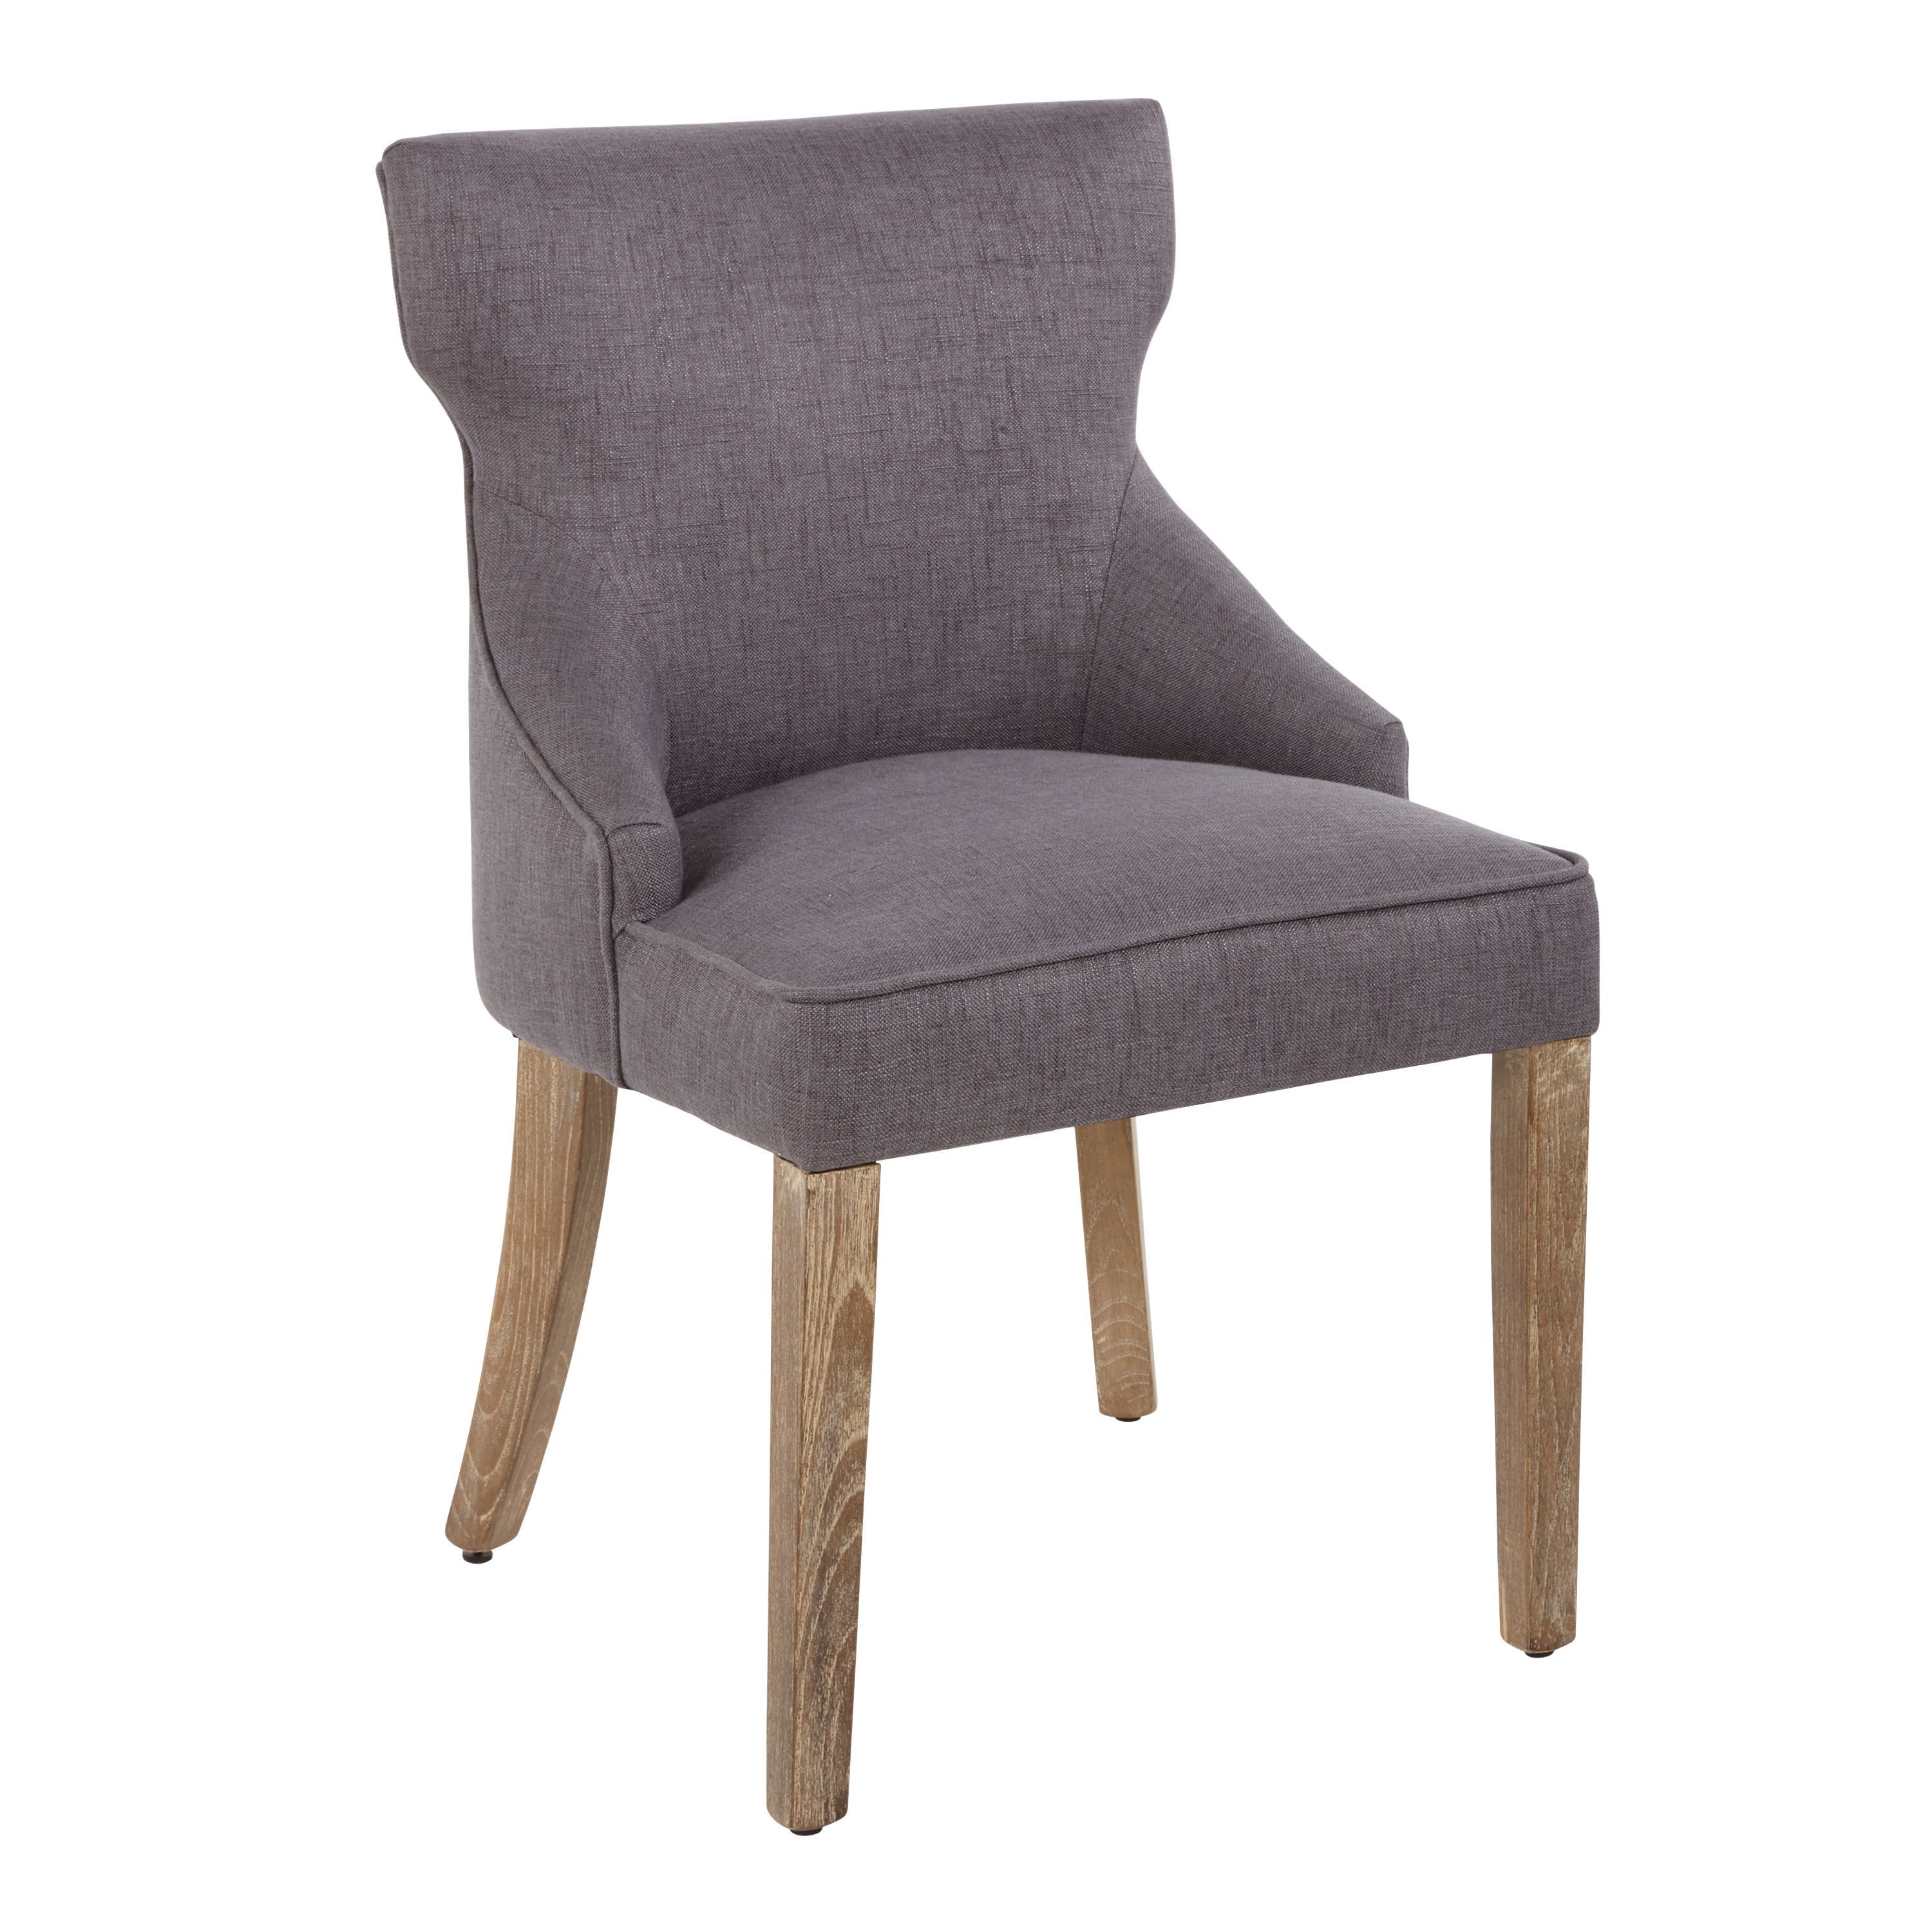 Landon Upholstered Dining Chairs Set Of 2 | World Market